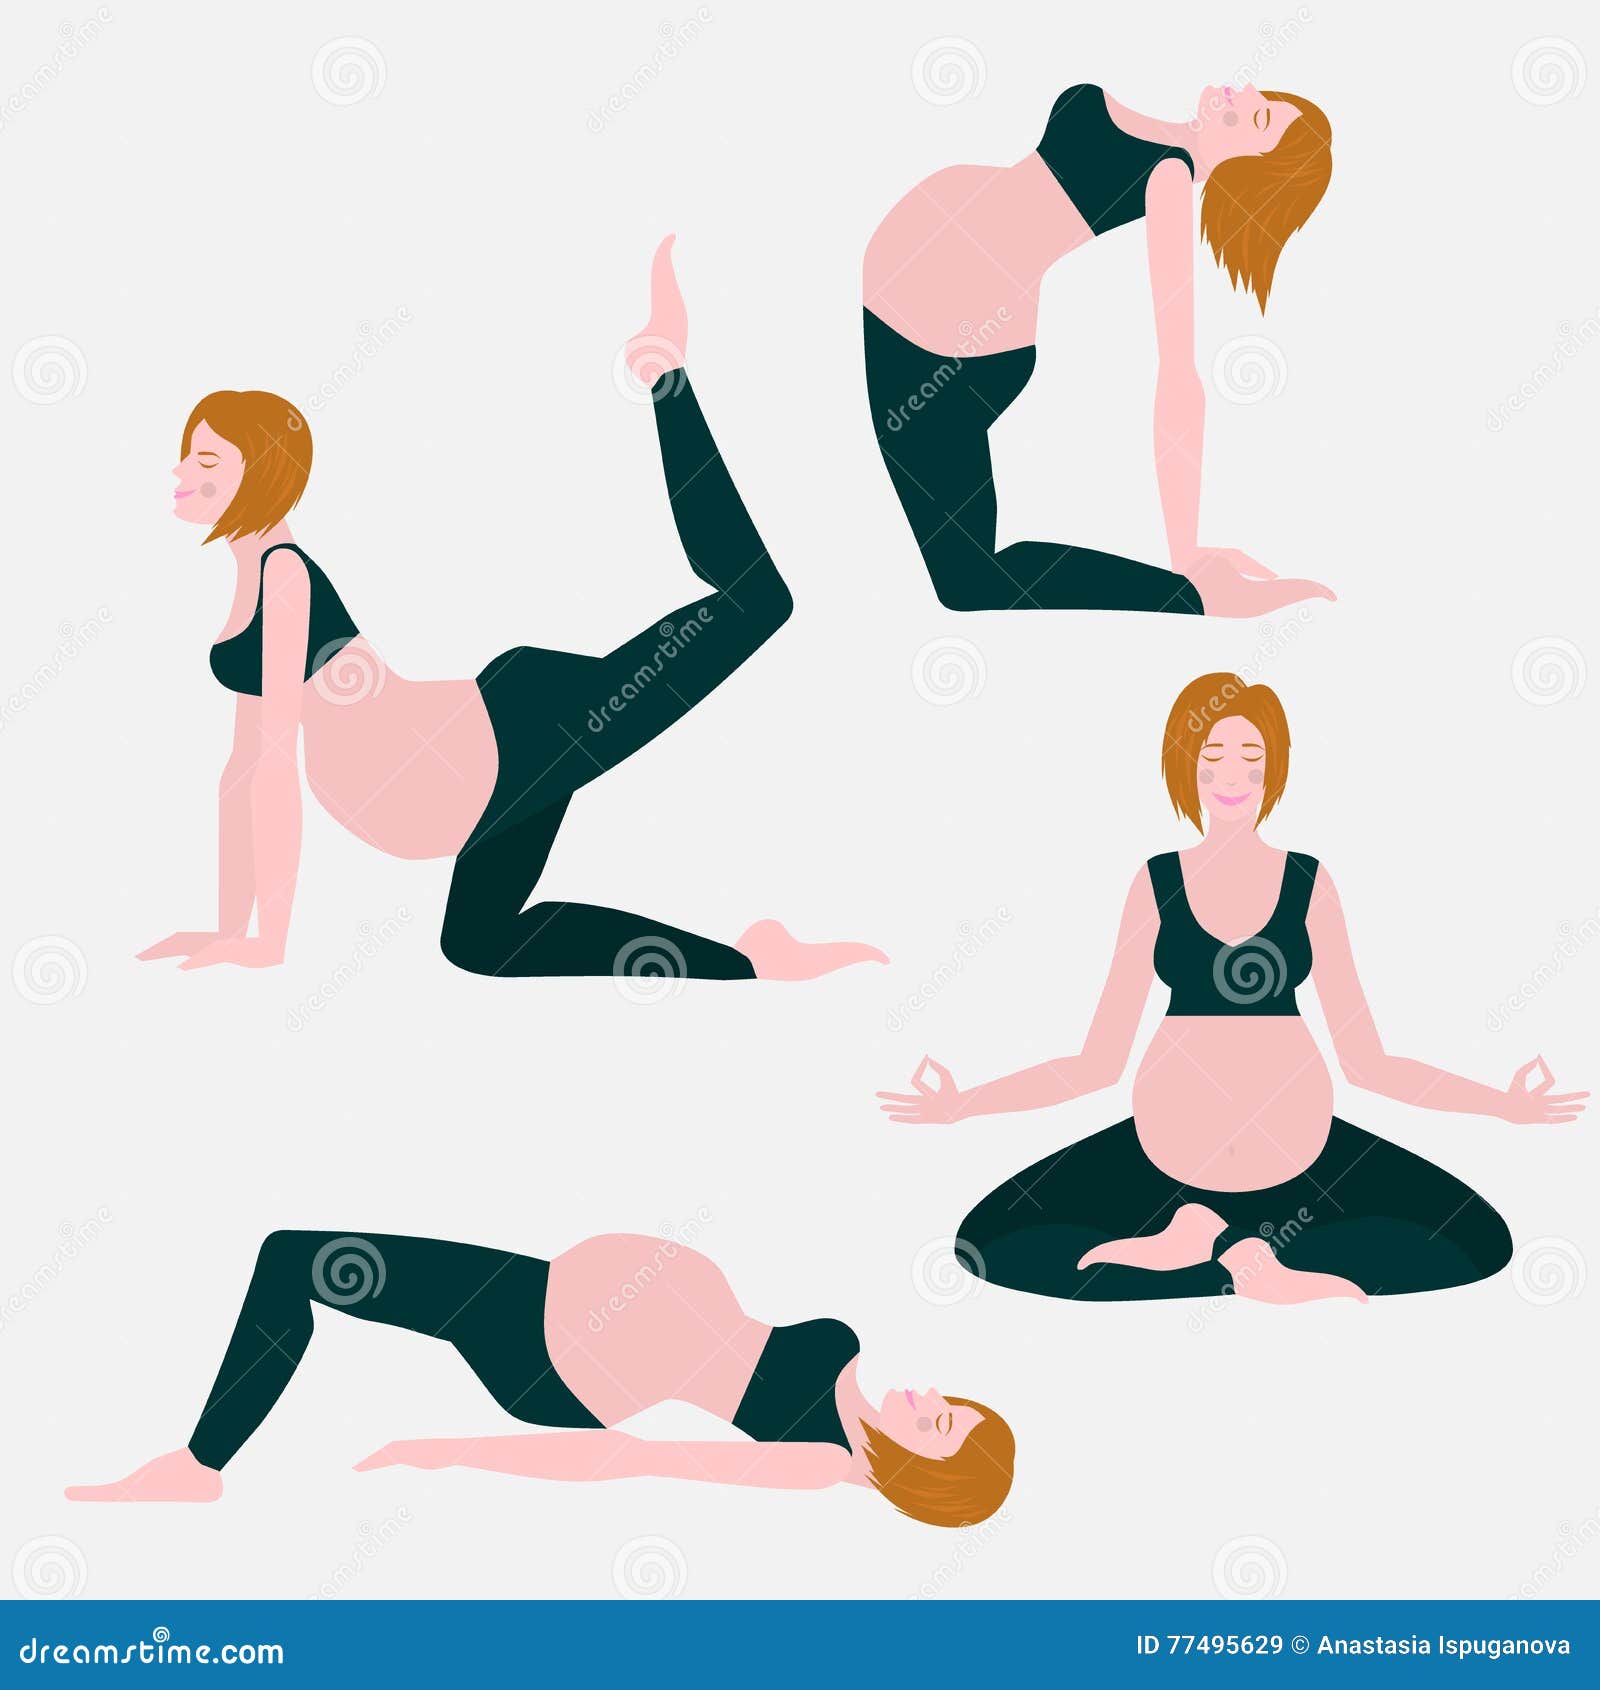 Stand Tall: 11 Yoga Poses to Improve Posture - YogaUOnline